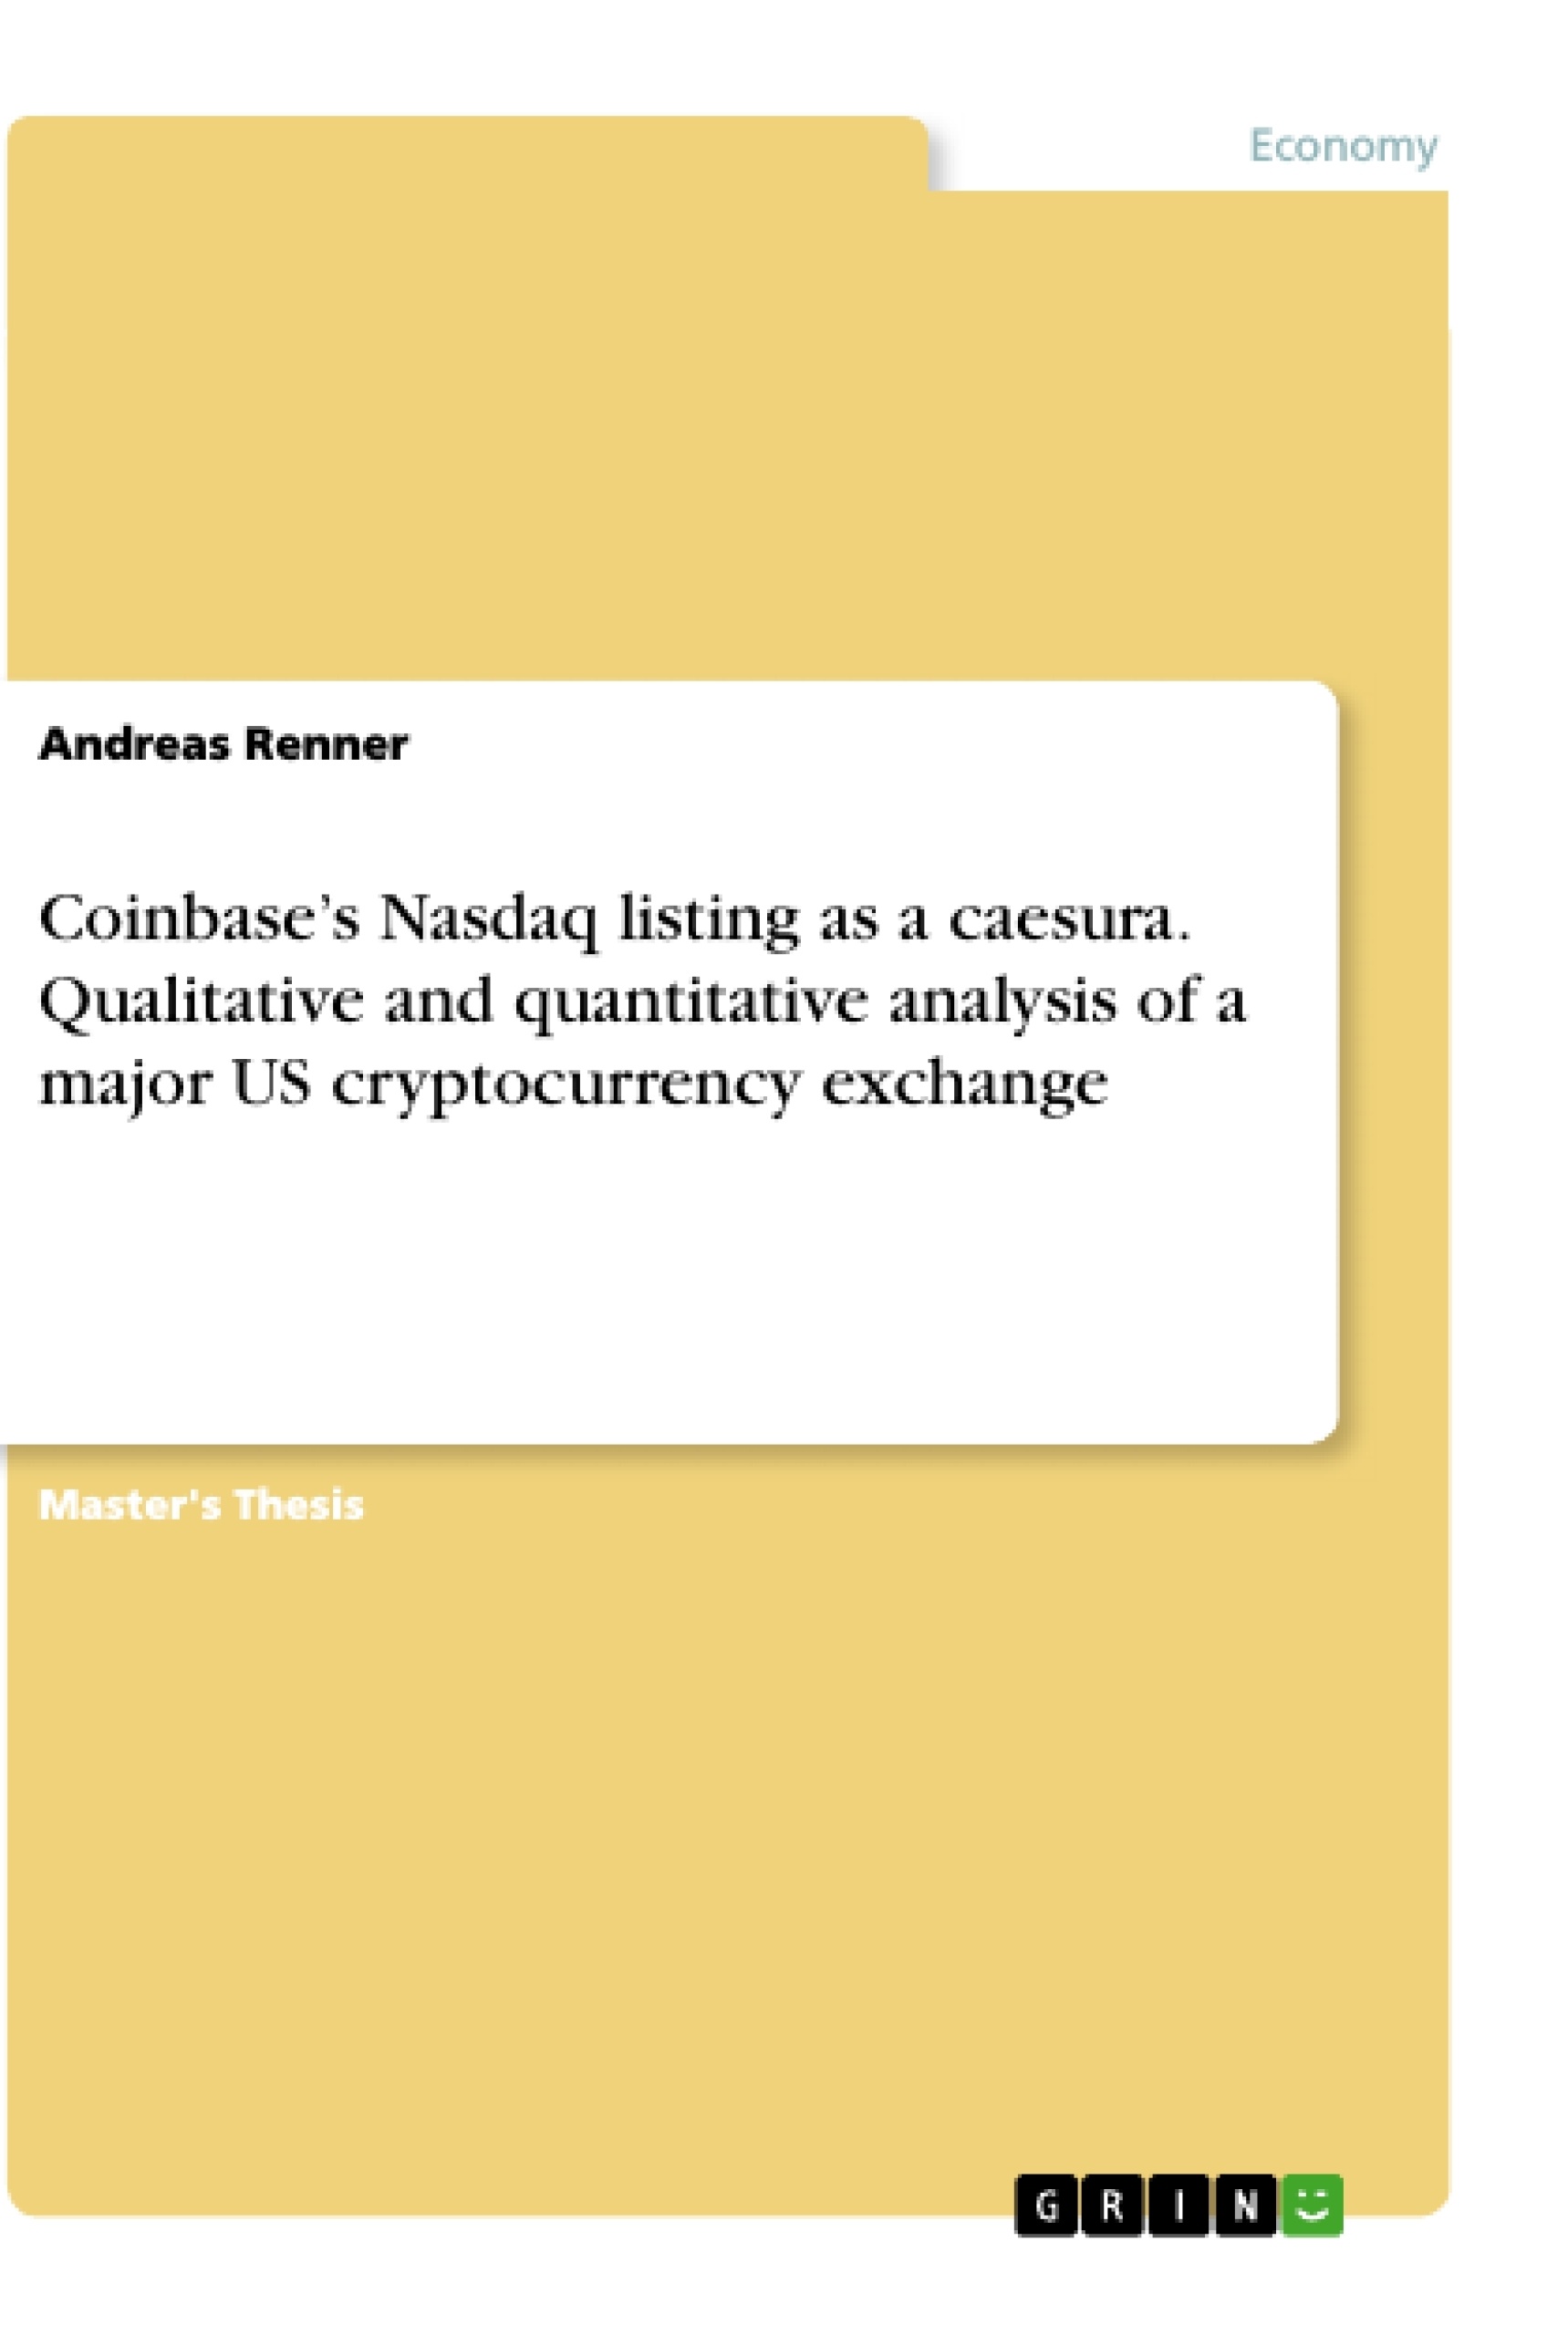 Title: Coinbase’s Nasdaq listing as a caesura. Qualitative and quantitative analysis of a major US cryptocurrency exchange